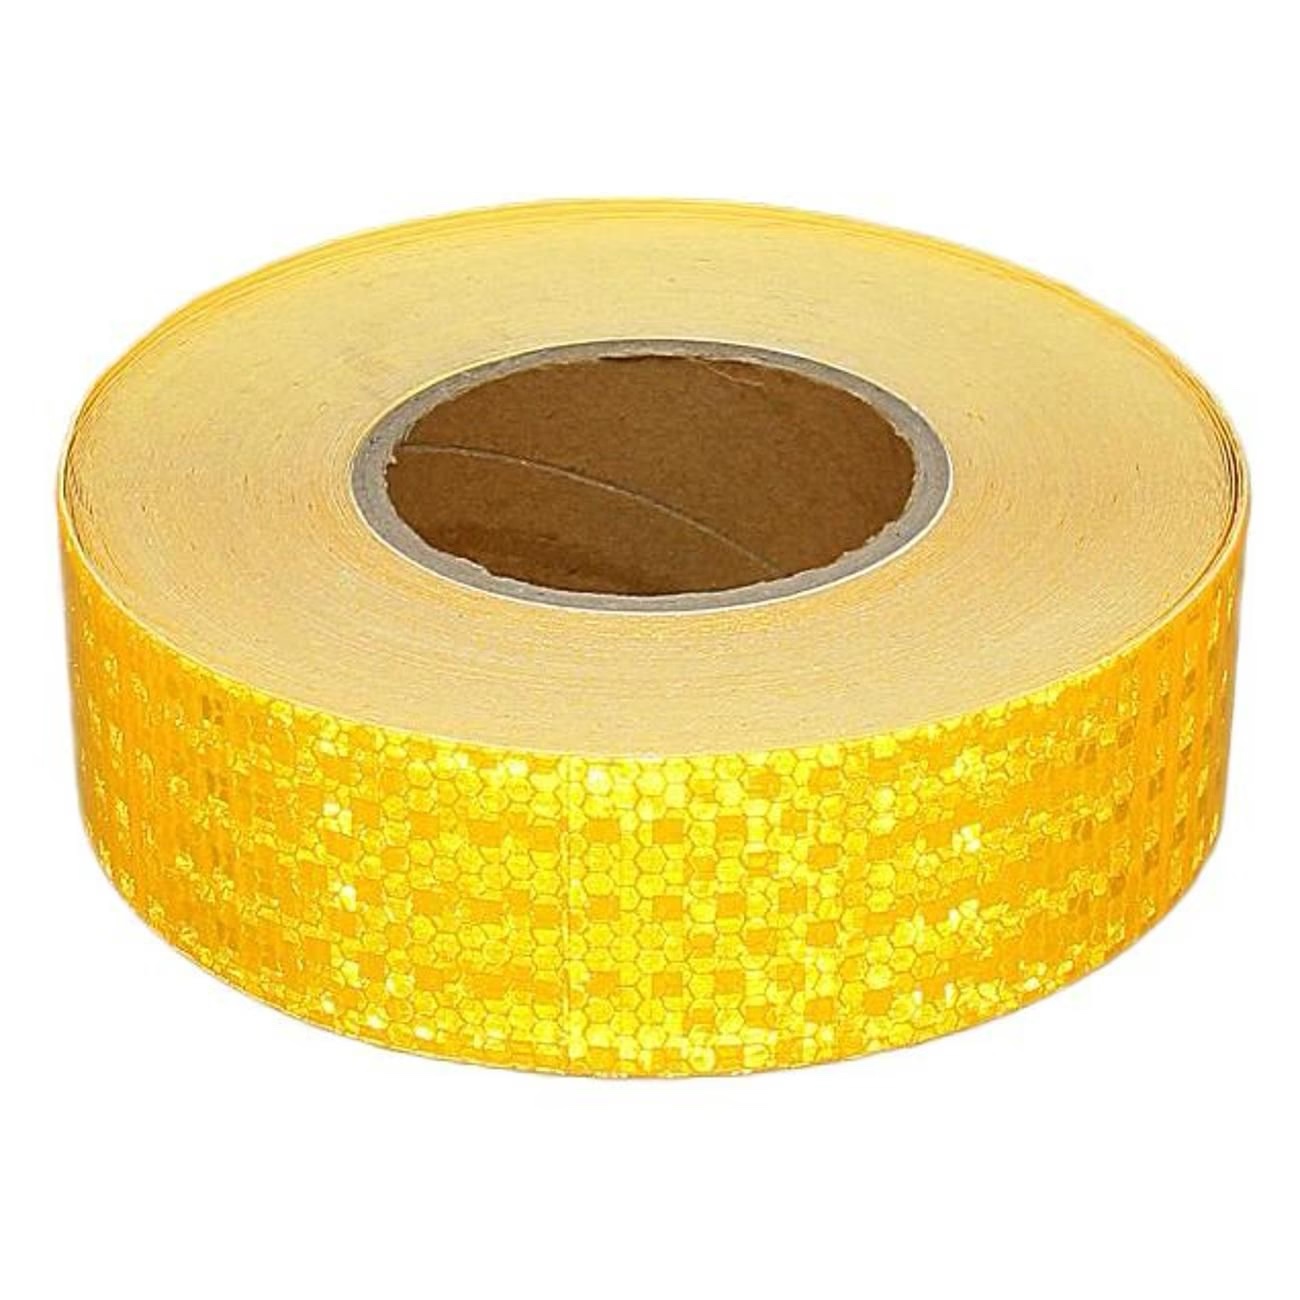 Светоотражающая самоклеящаяся лента СИМАЛЕНД желтая, 5 см х 45 м 1404122 светоотражающая термонаклейка